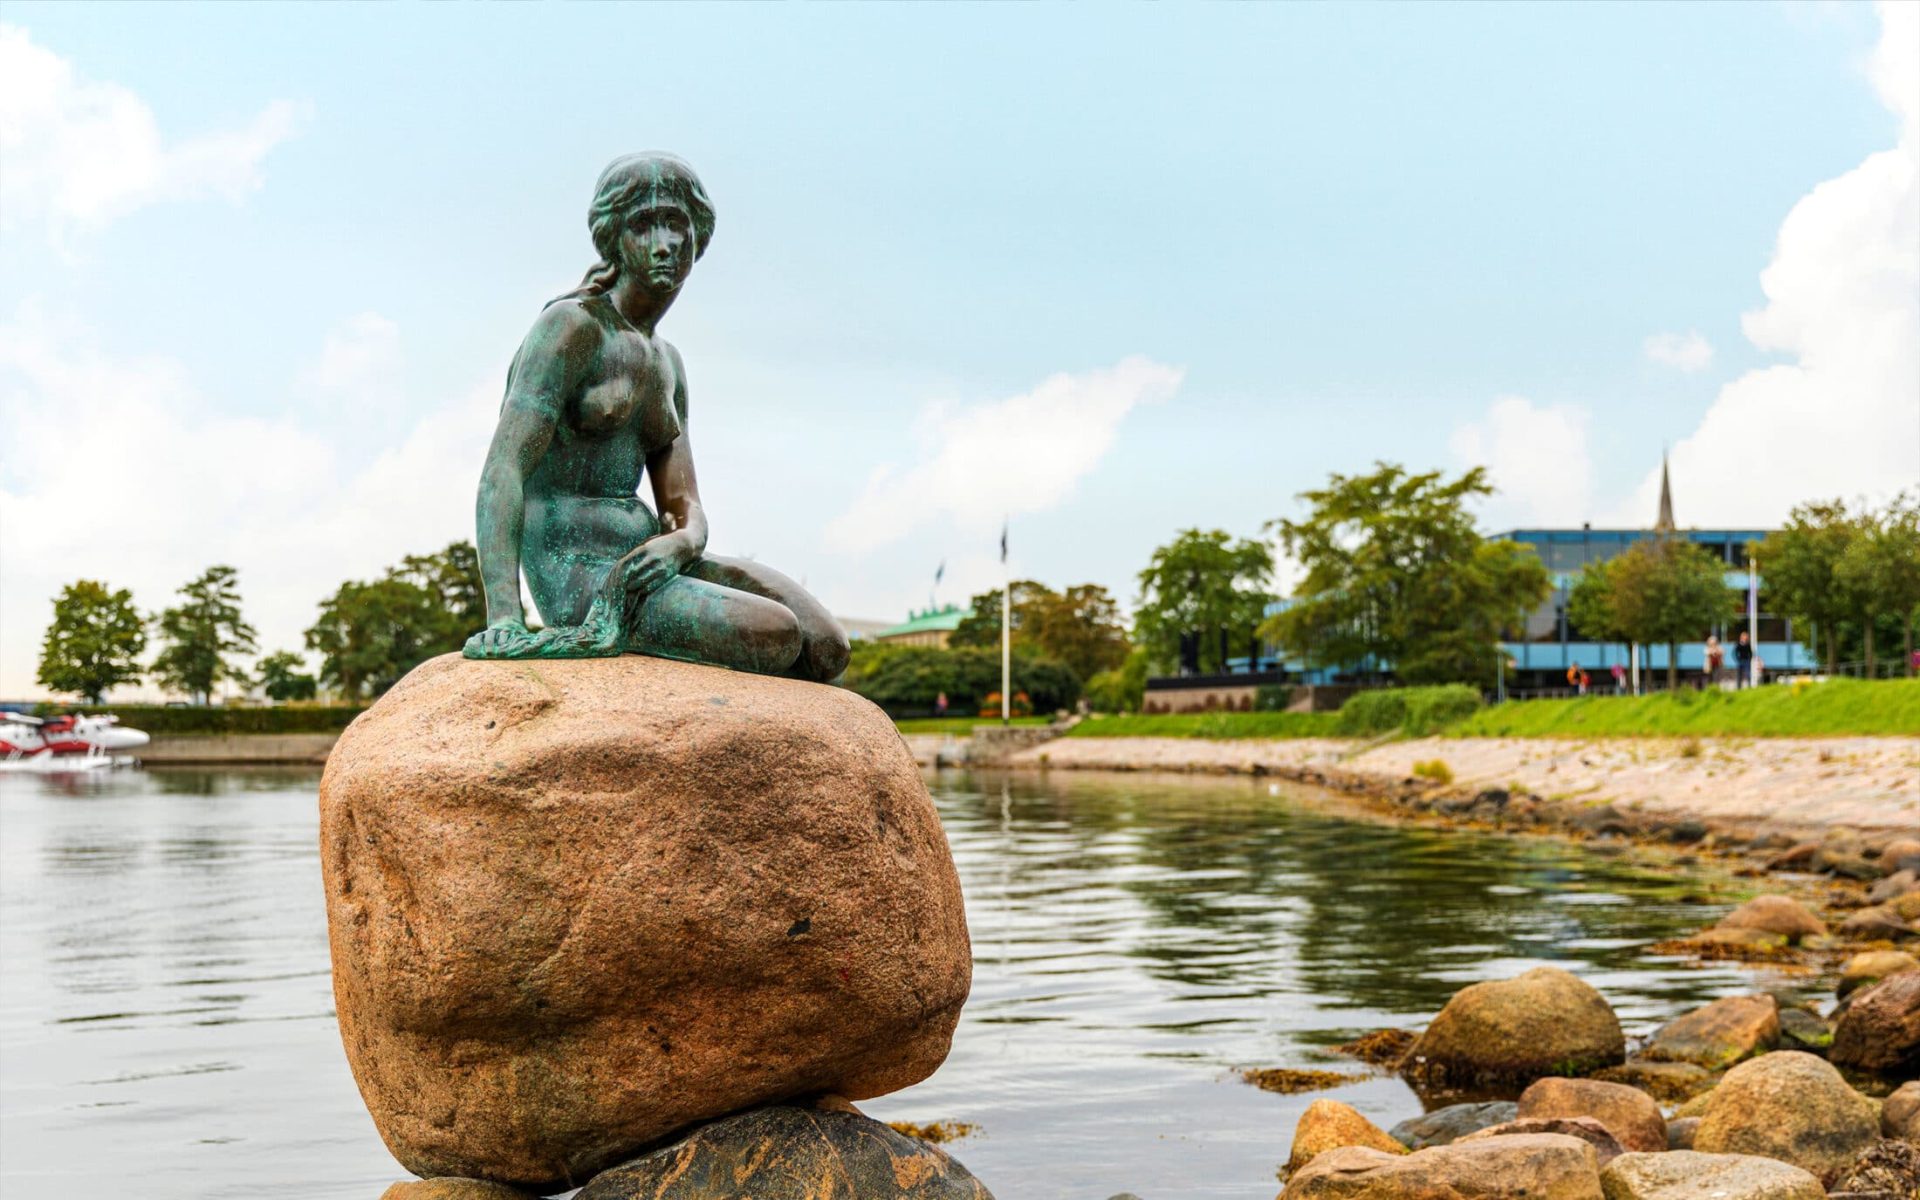 Little Mermaid Statue in Copenhagen, Denmark